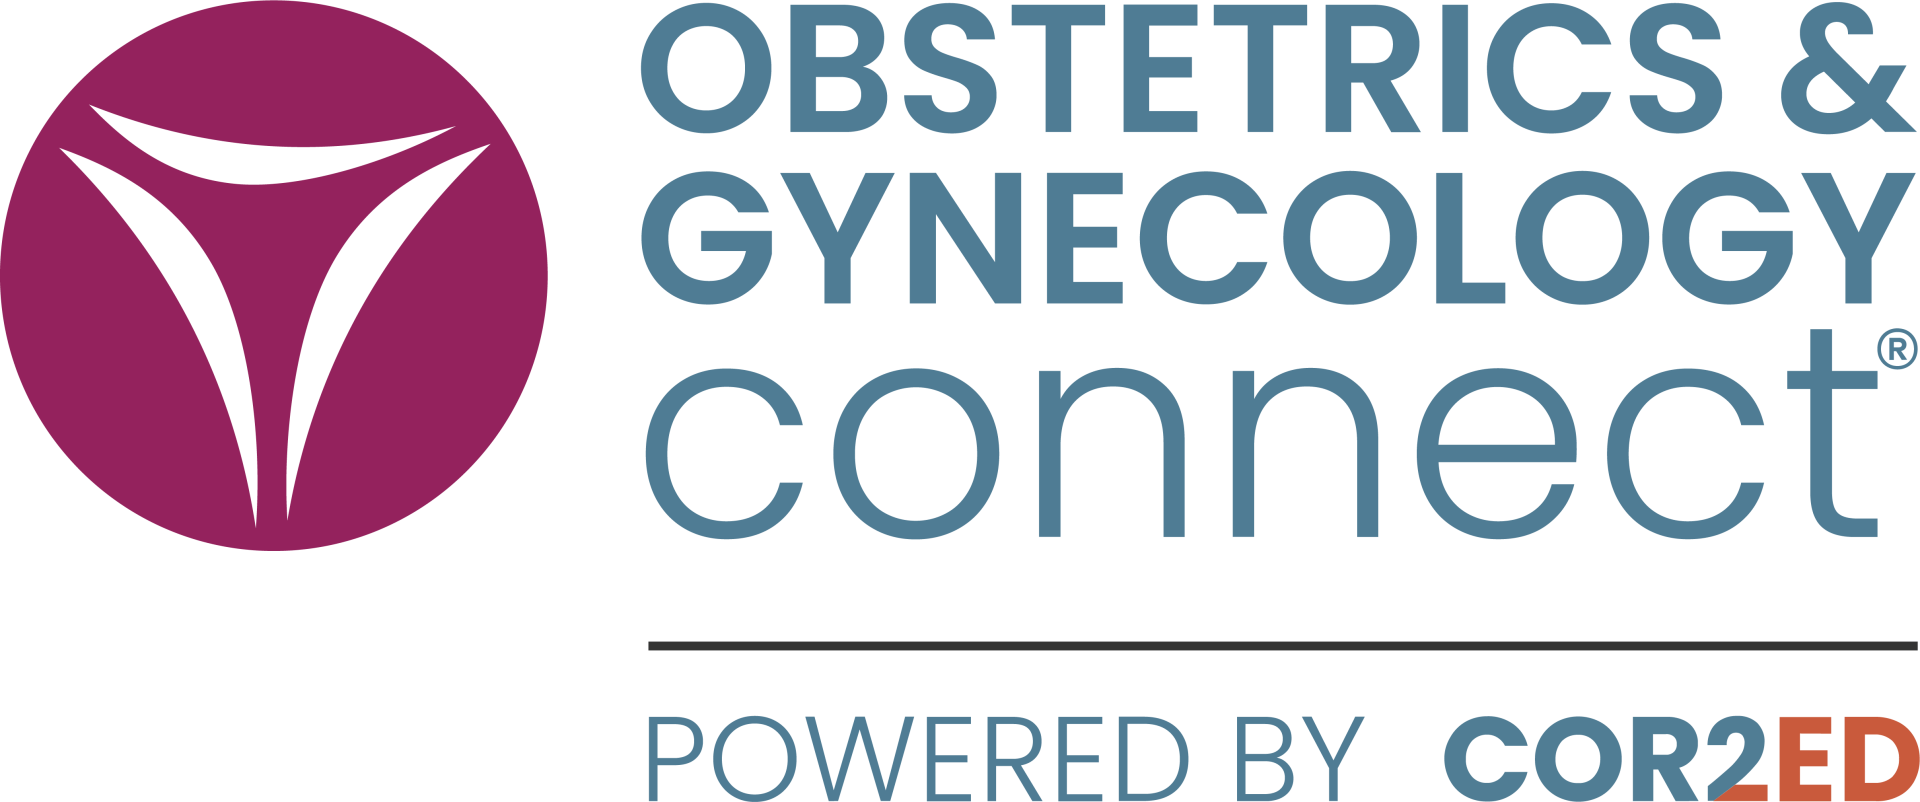 OBSTETRICS & GYNECOLOGY CONNECT 